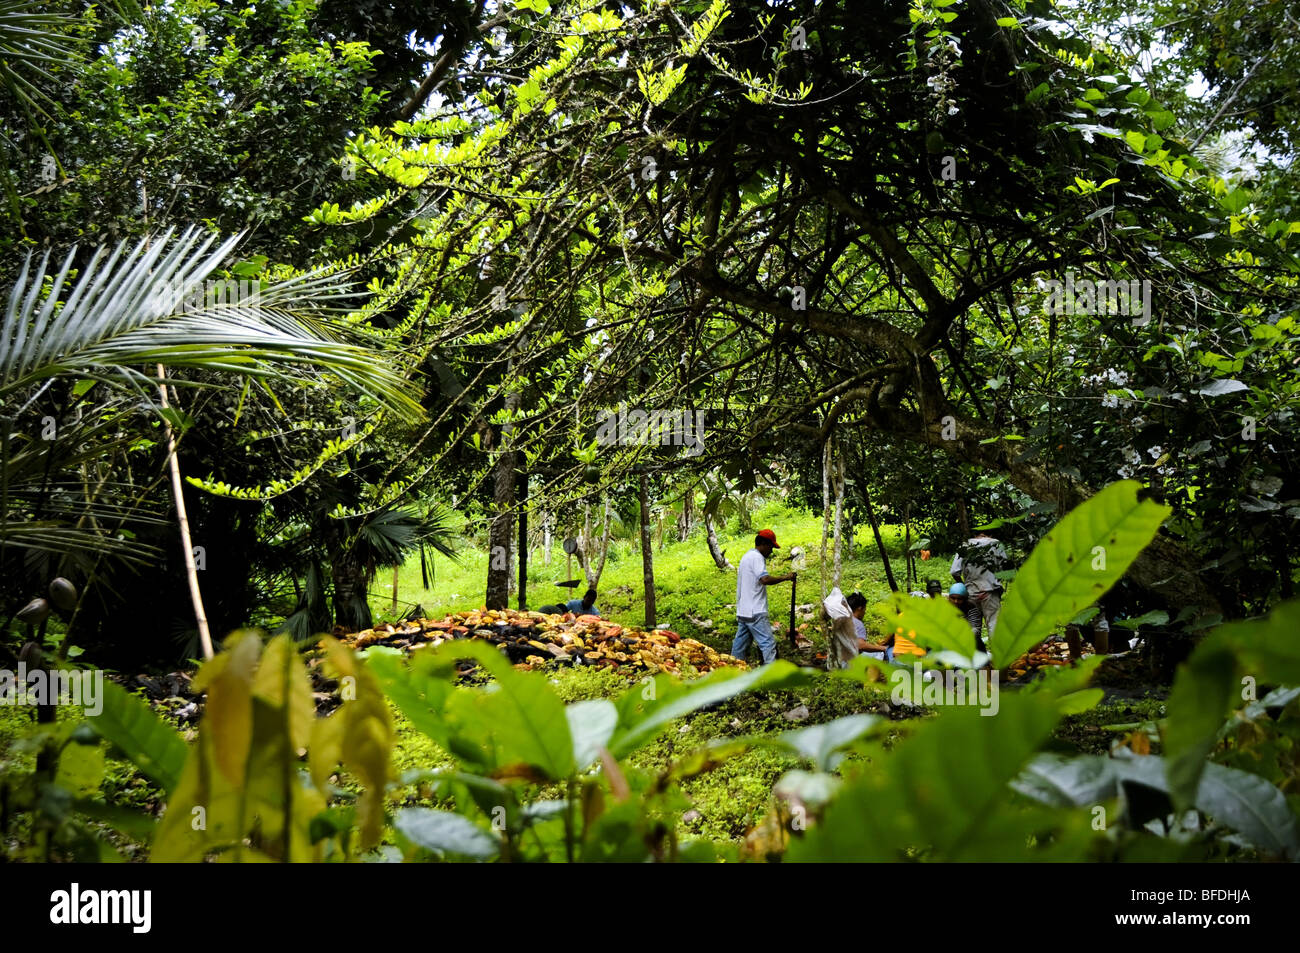 workers harvest cacao (Theobroma cacao) among lush, green trees and vegetation in Choroni, Venezuela. Stock Photo